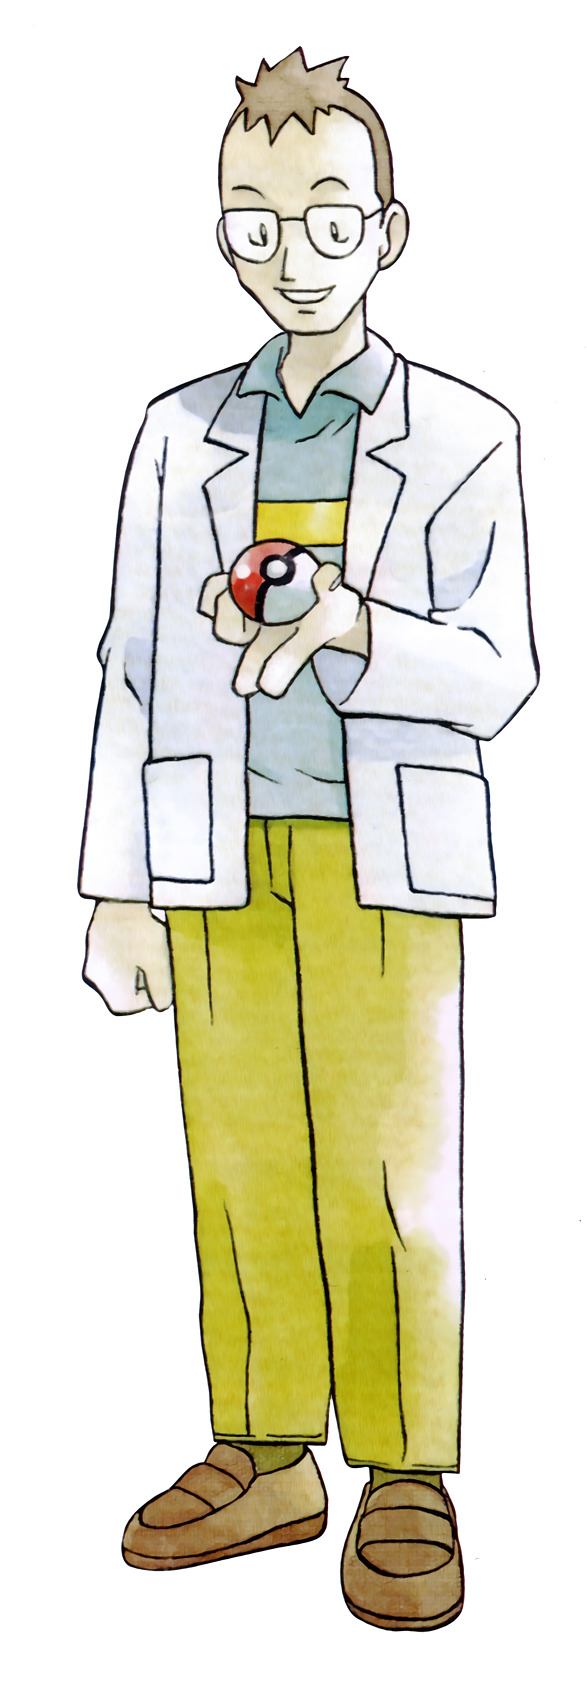 Pokemon professor elm